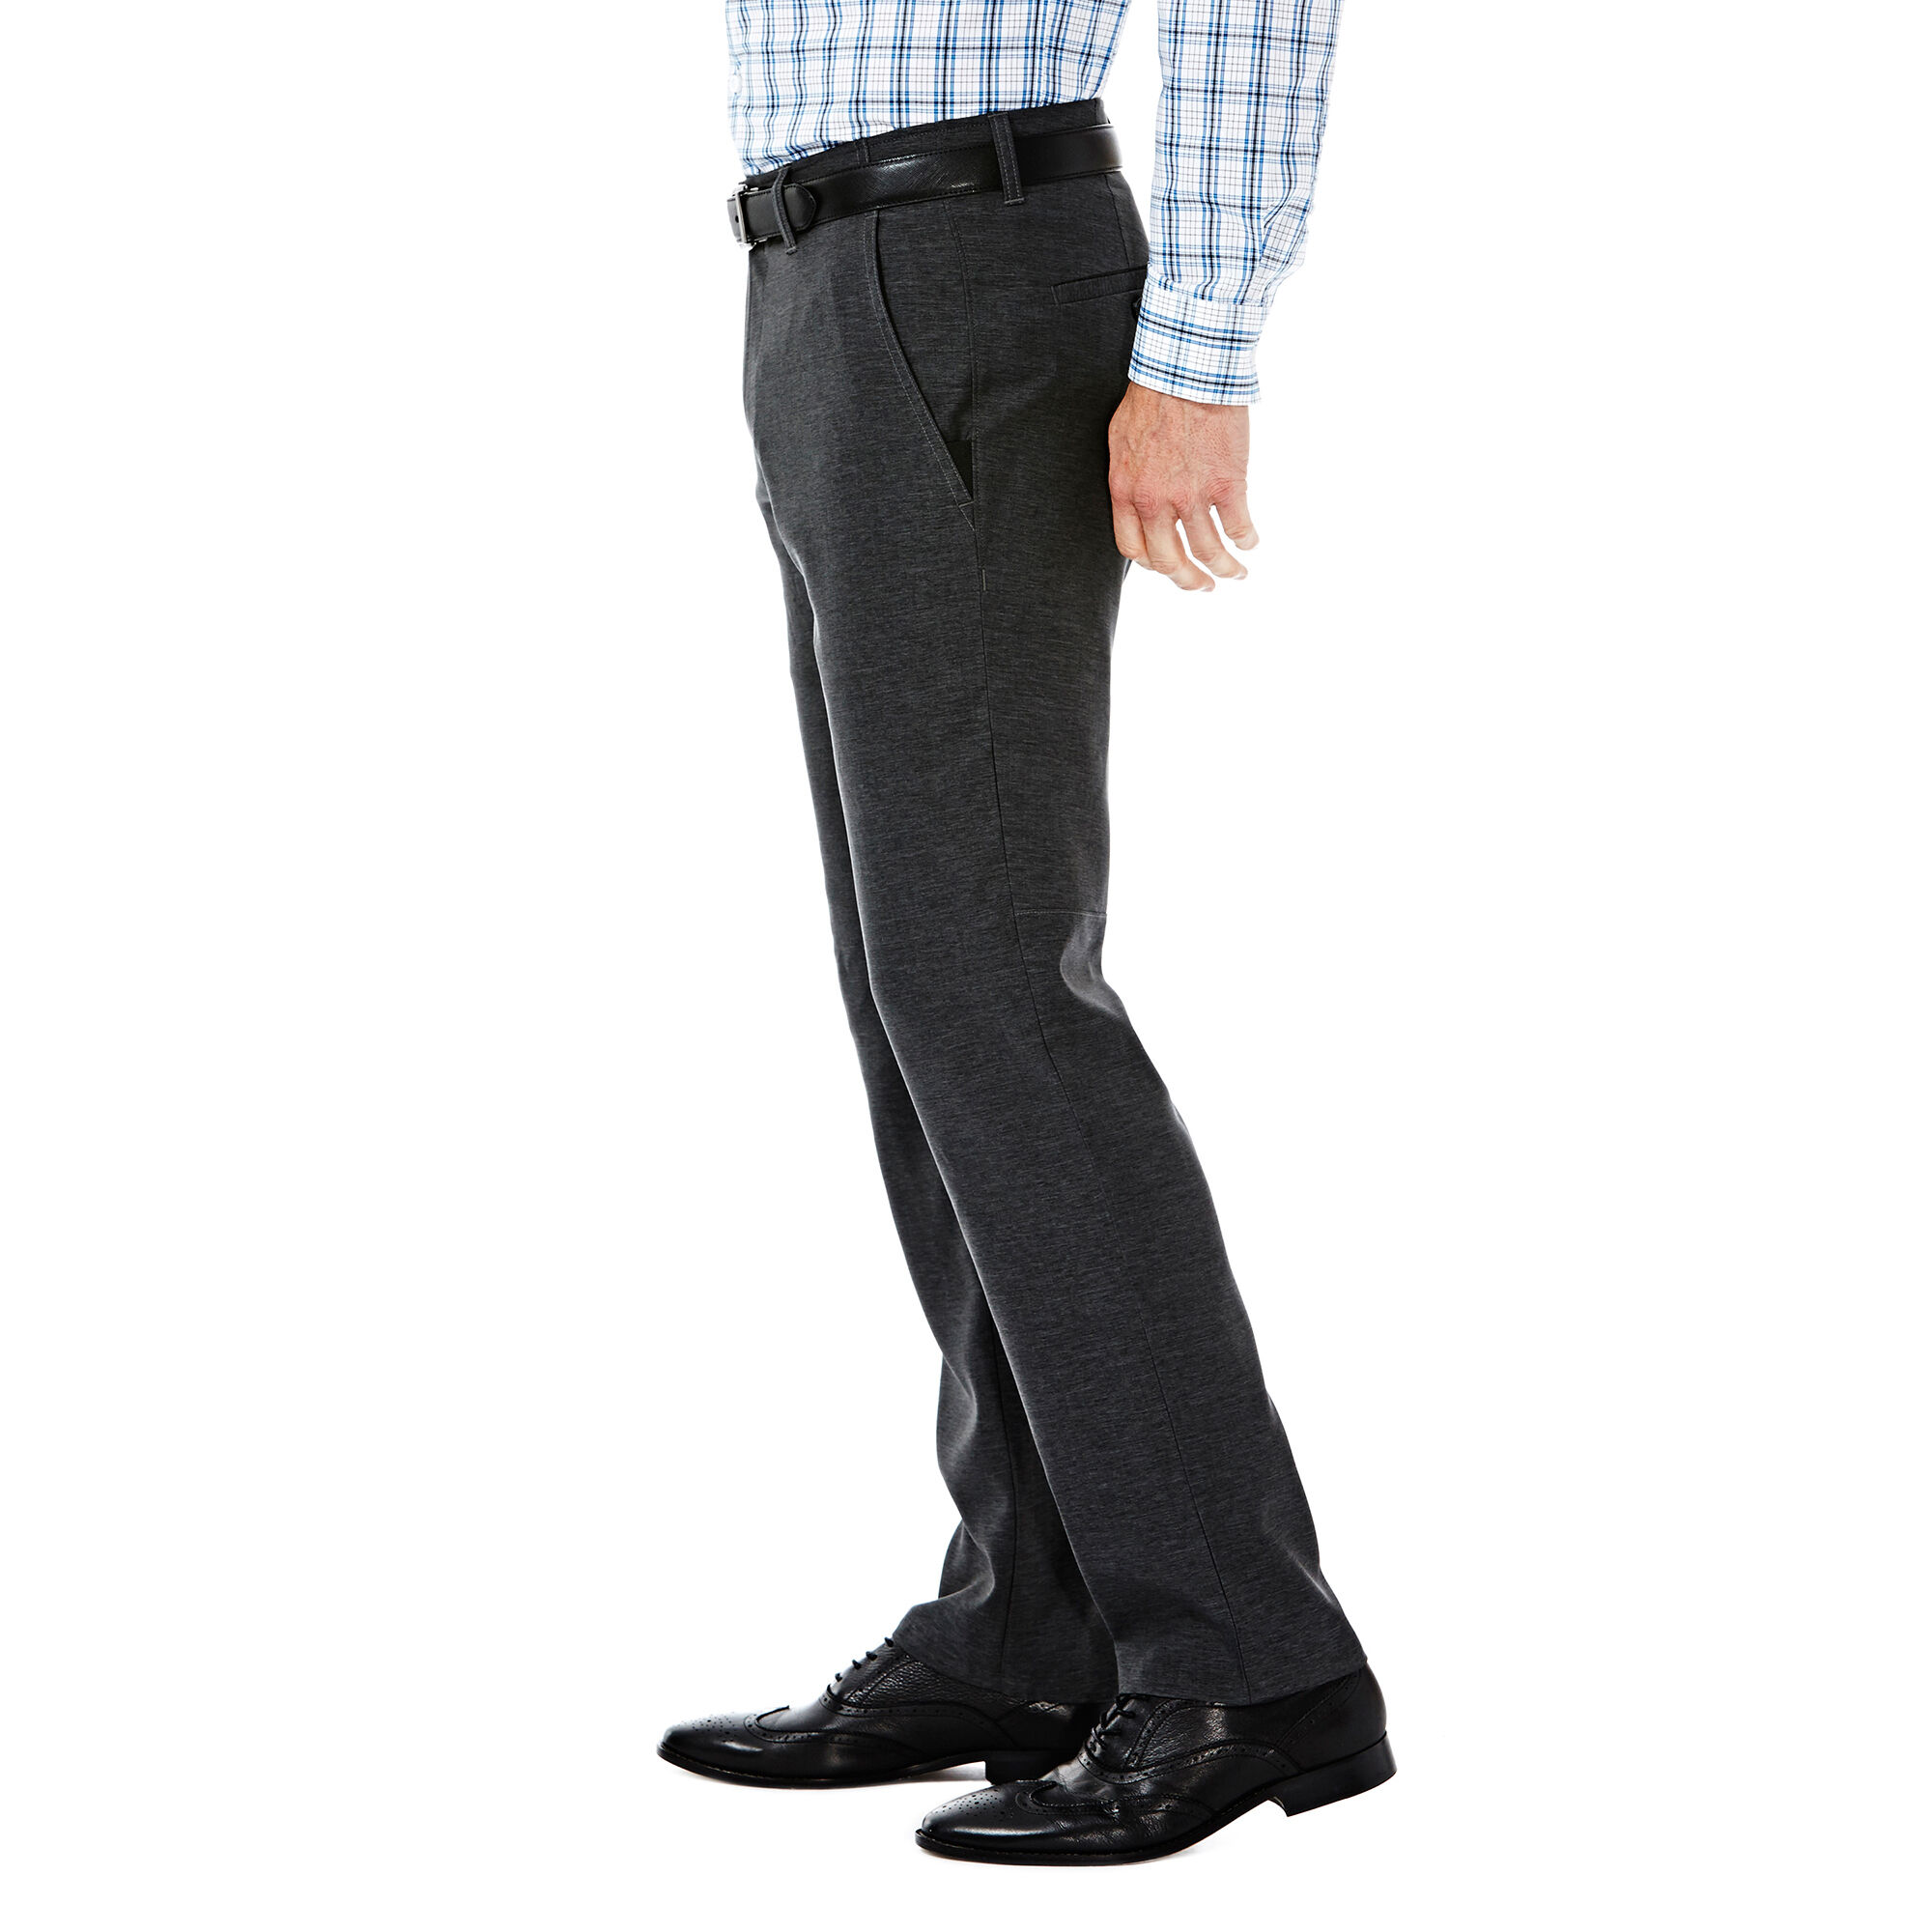 Haggar Men's Iron Free Premium Khaki Straight Fit Flat Front Flex Waist Casual  Pant Sand 30 x 30 at Amazon Men's Clothing store